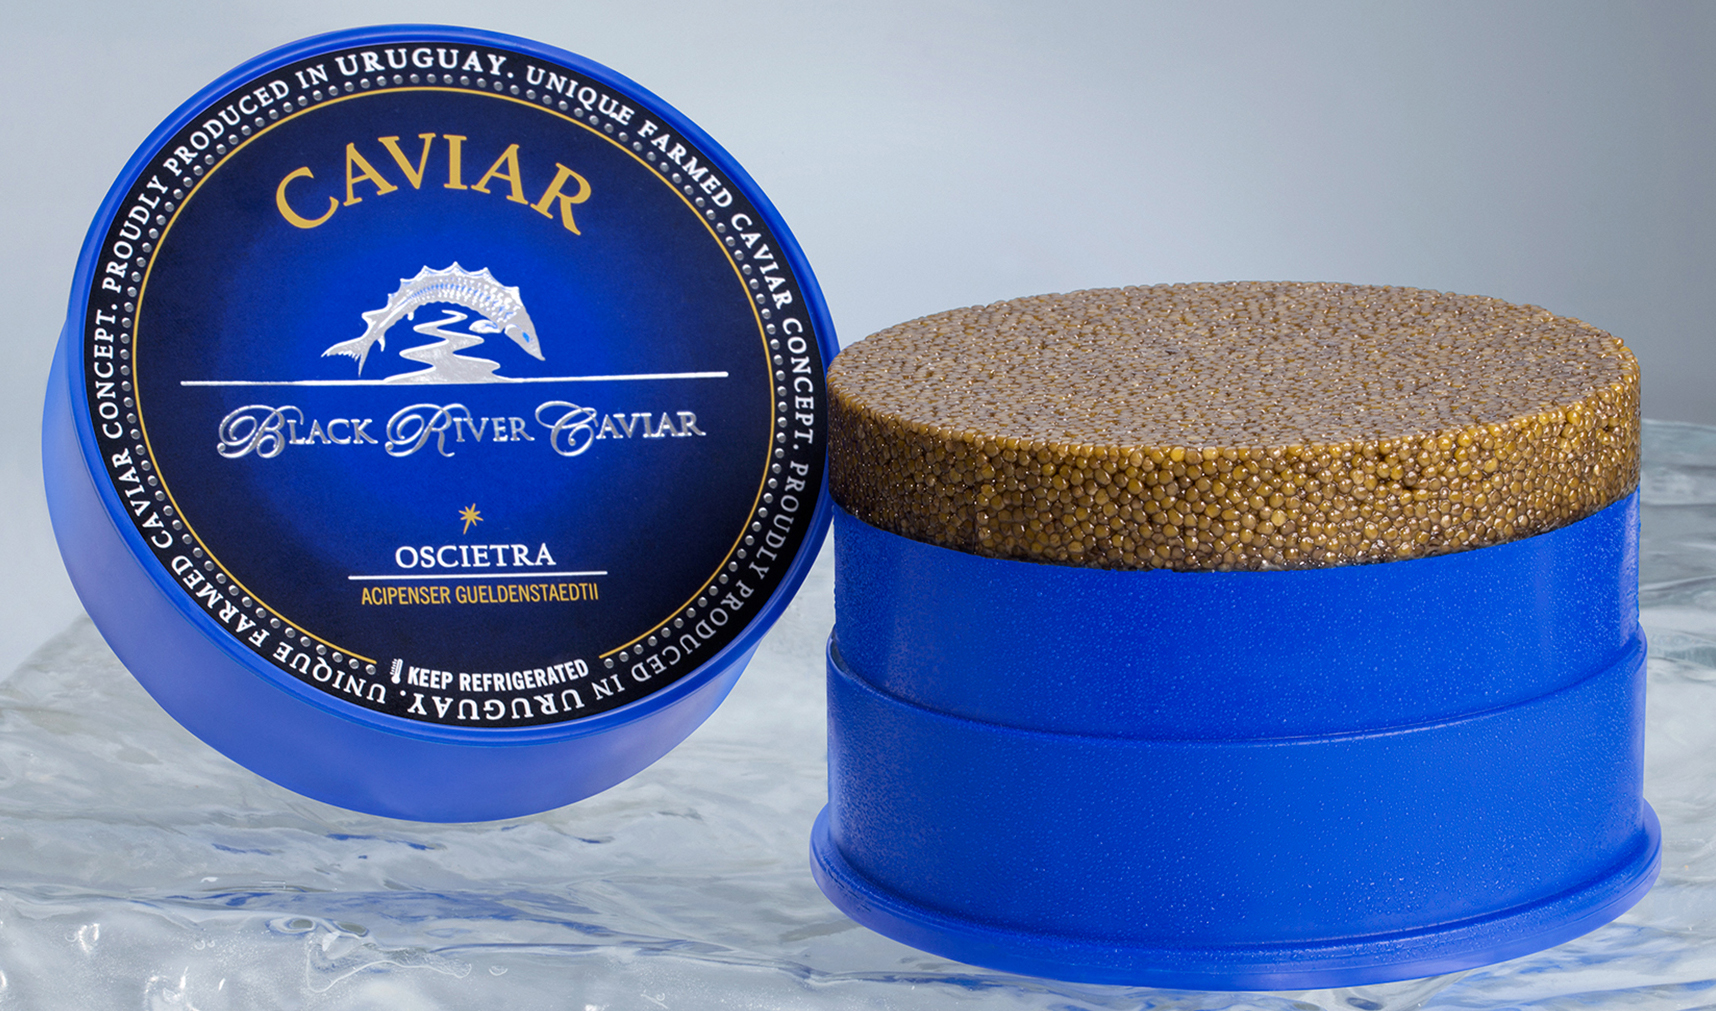 1k Caviar Club Black River Caviar